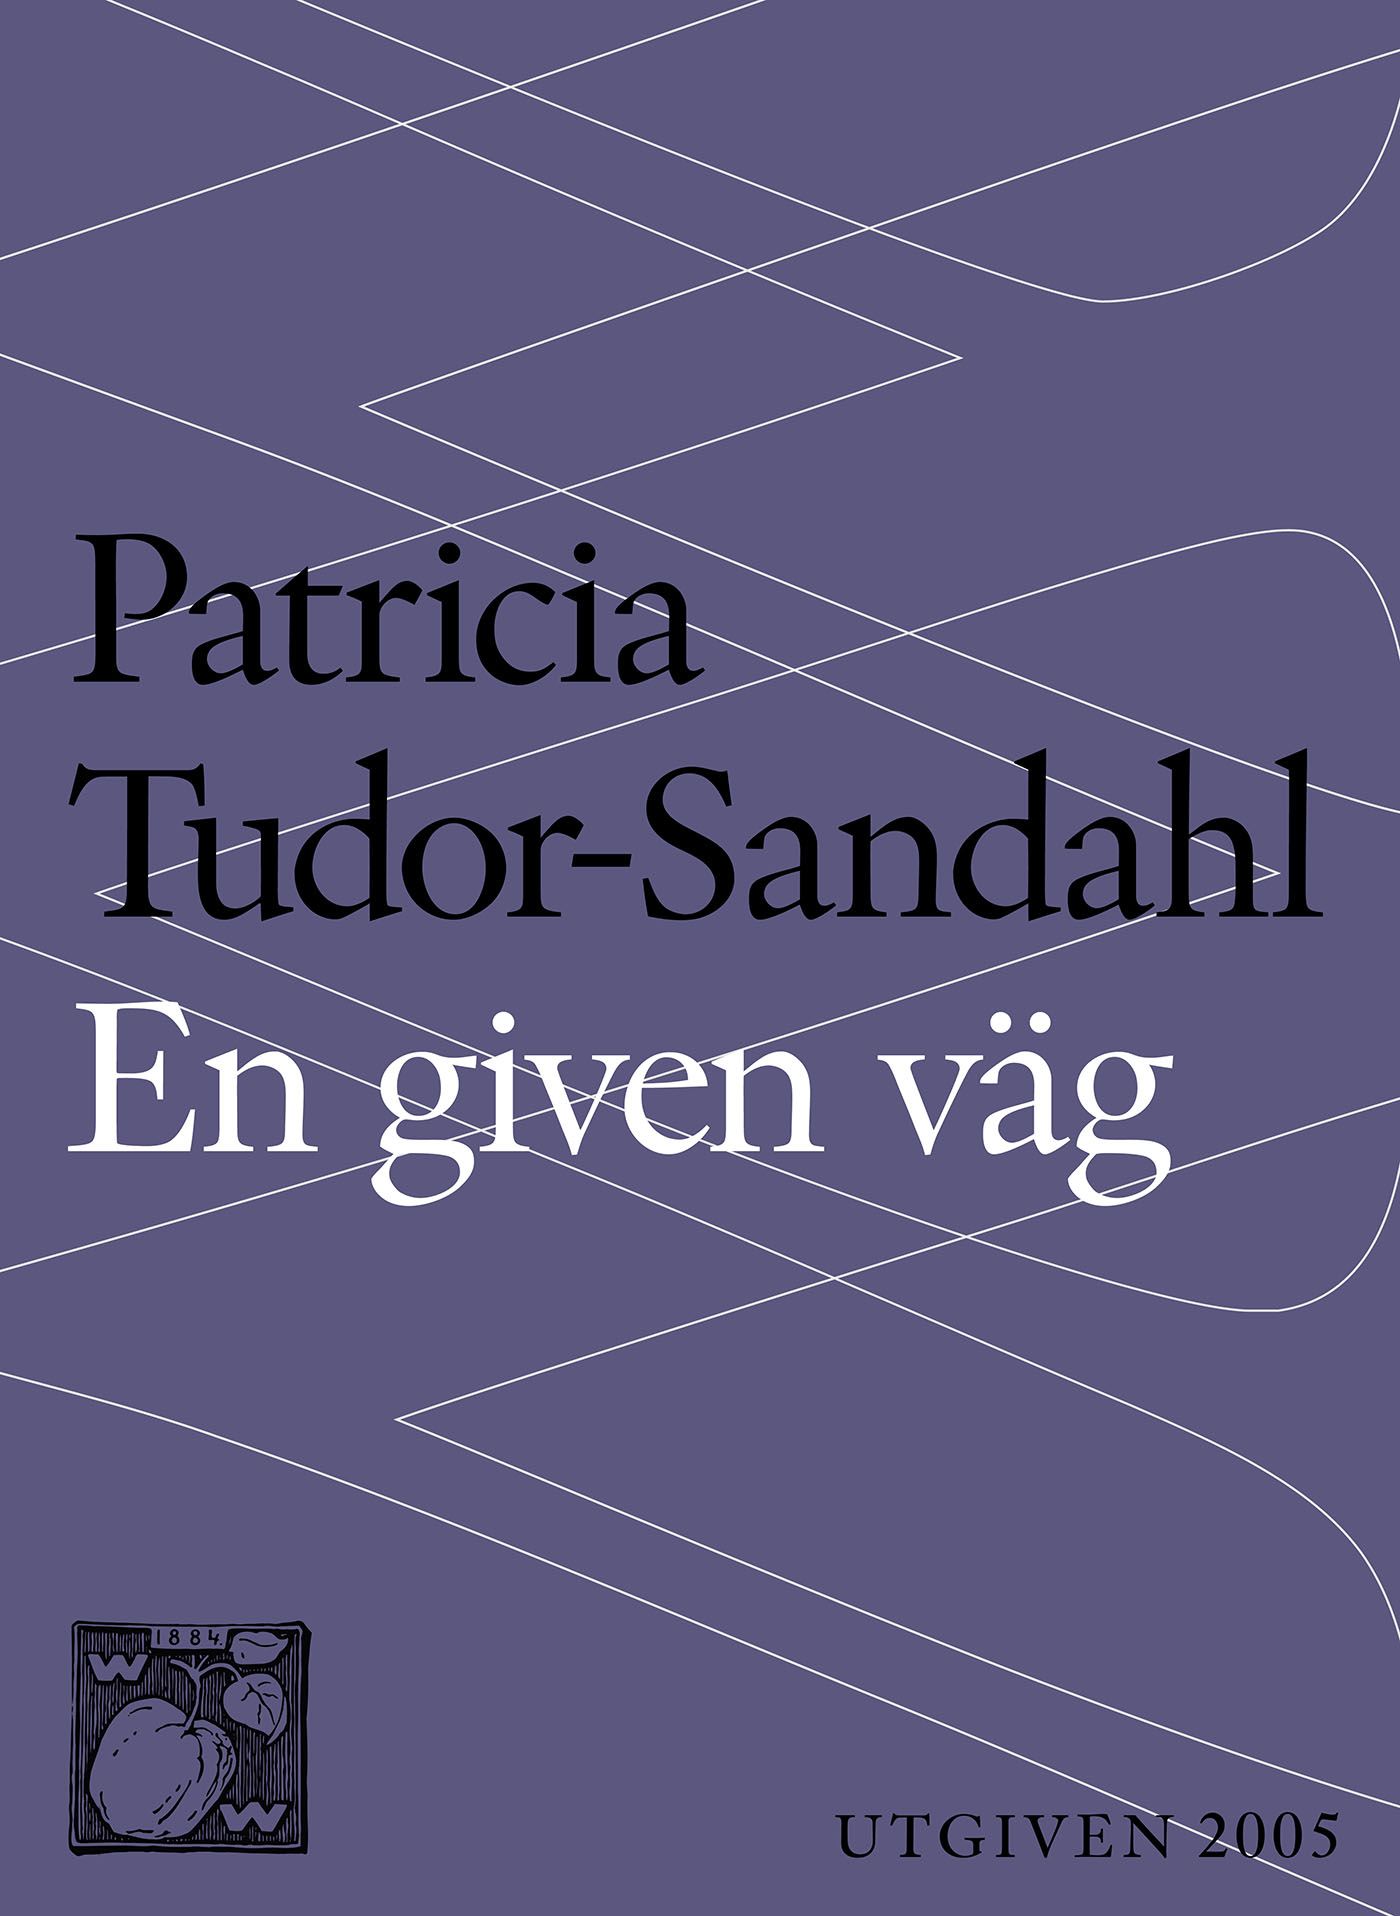 En given väg, e-bok av Patricia Tudor-Sandahl